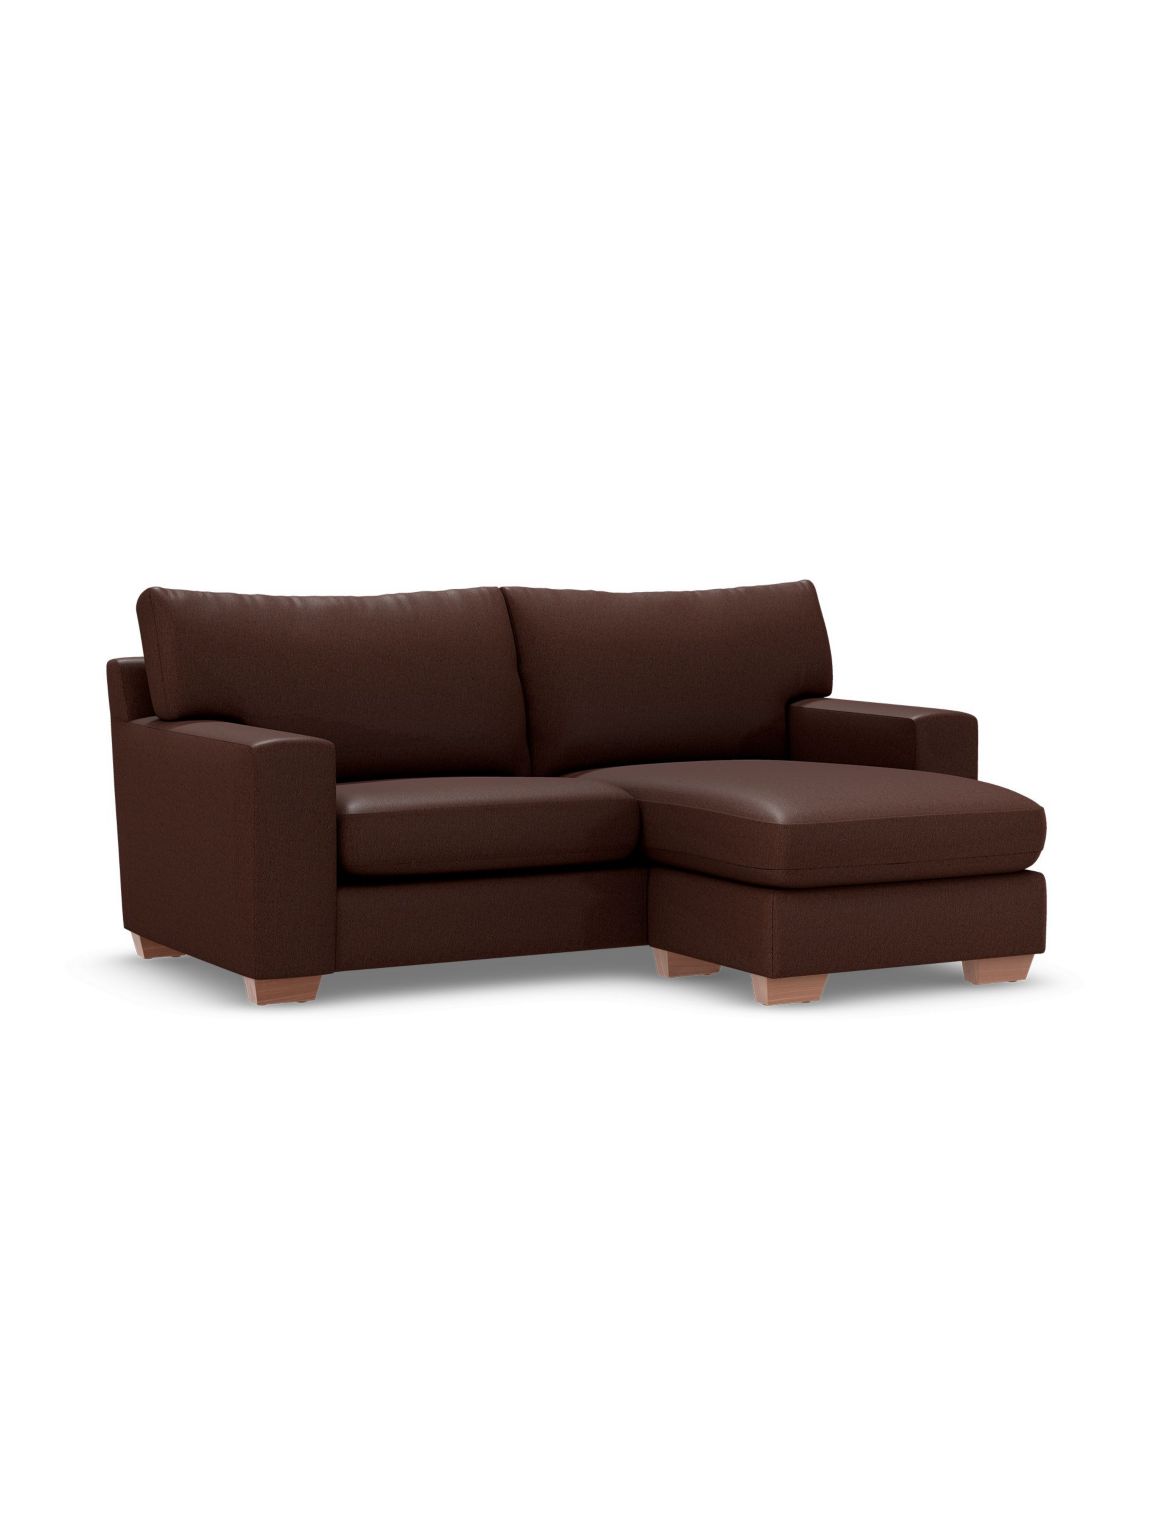 Alfie Corner Chaise Sofa brown